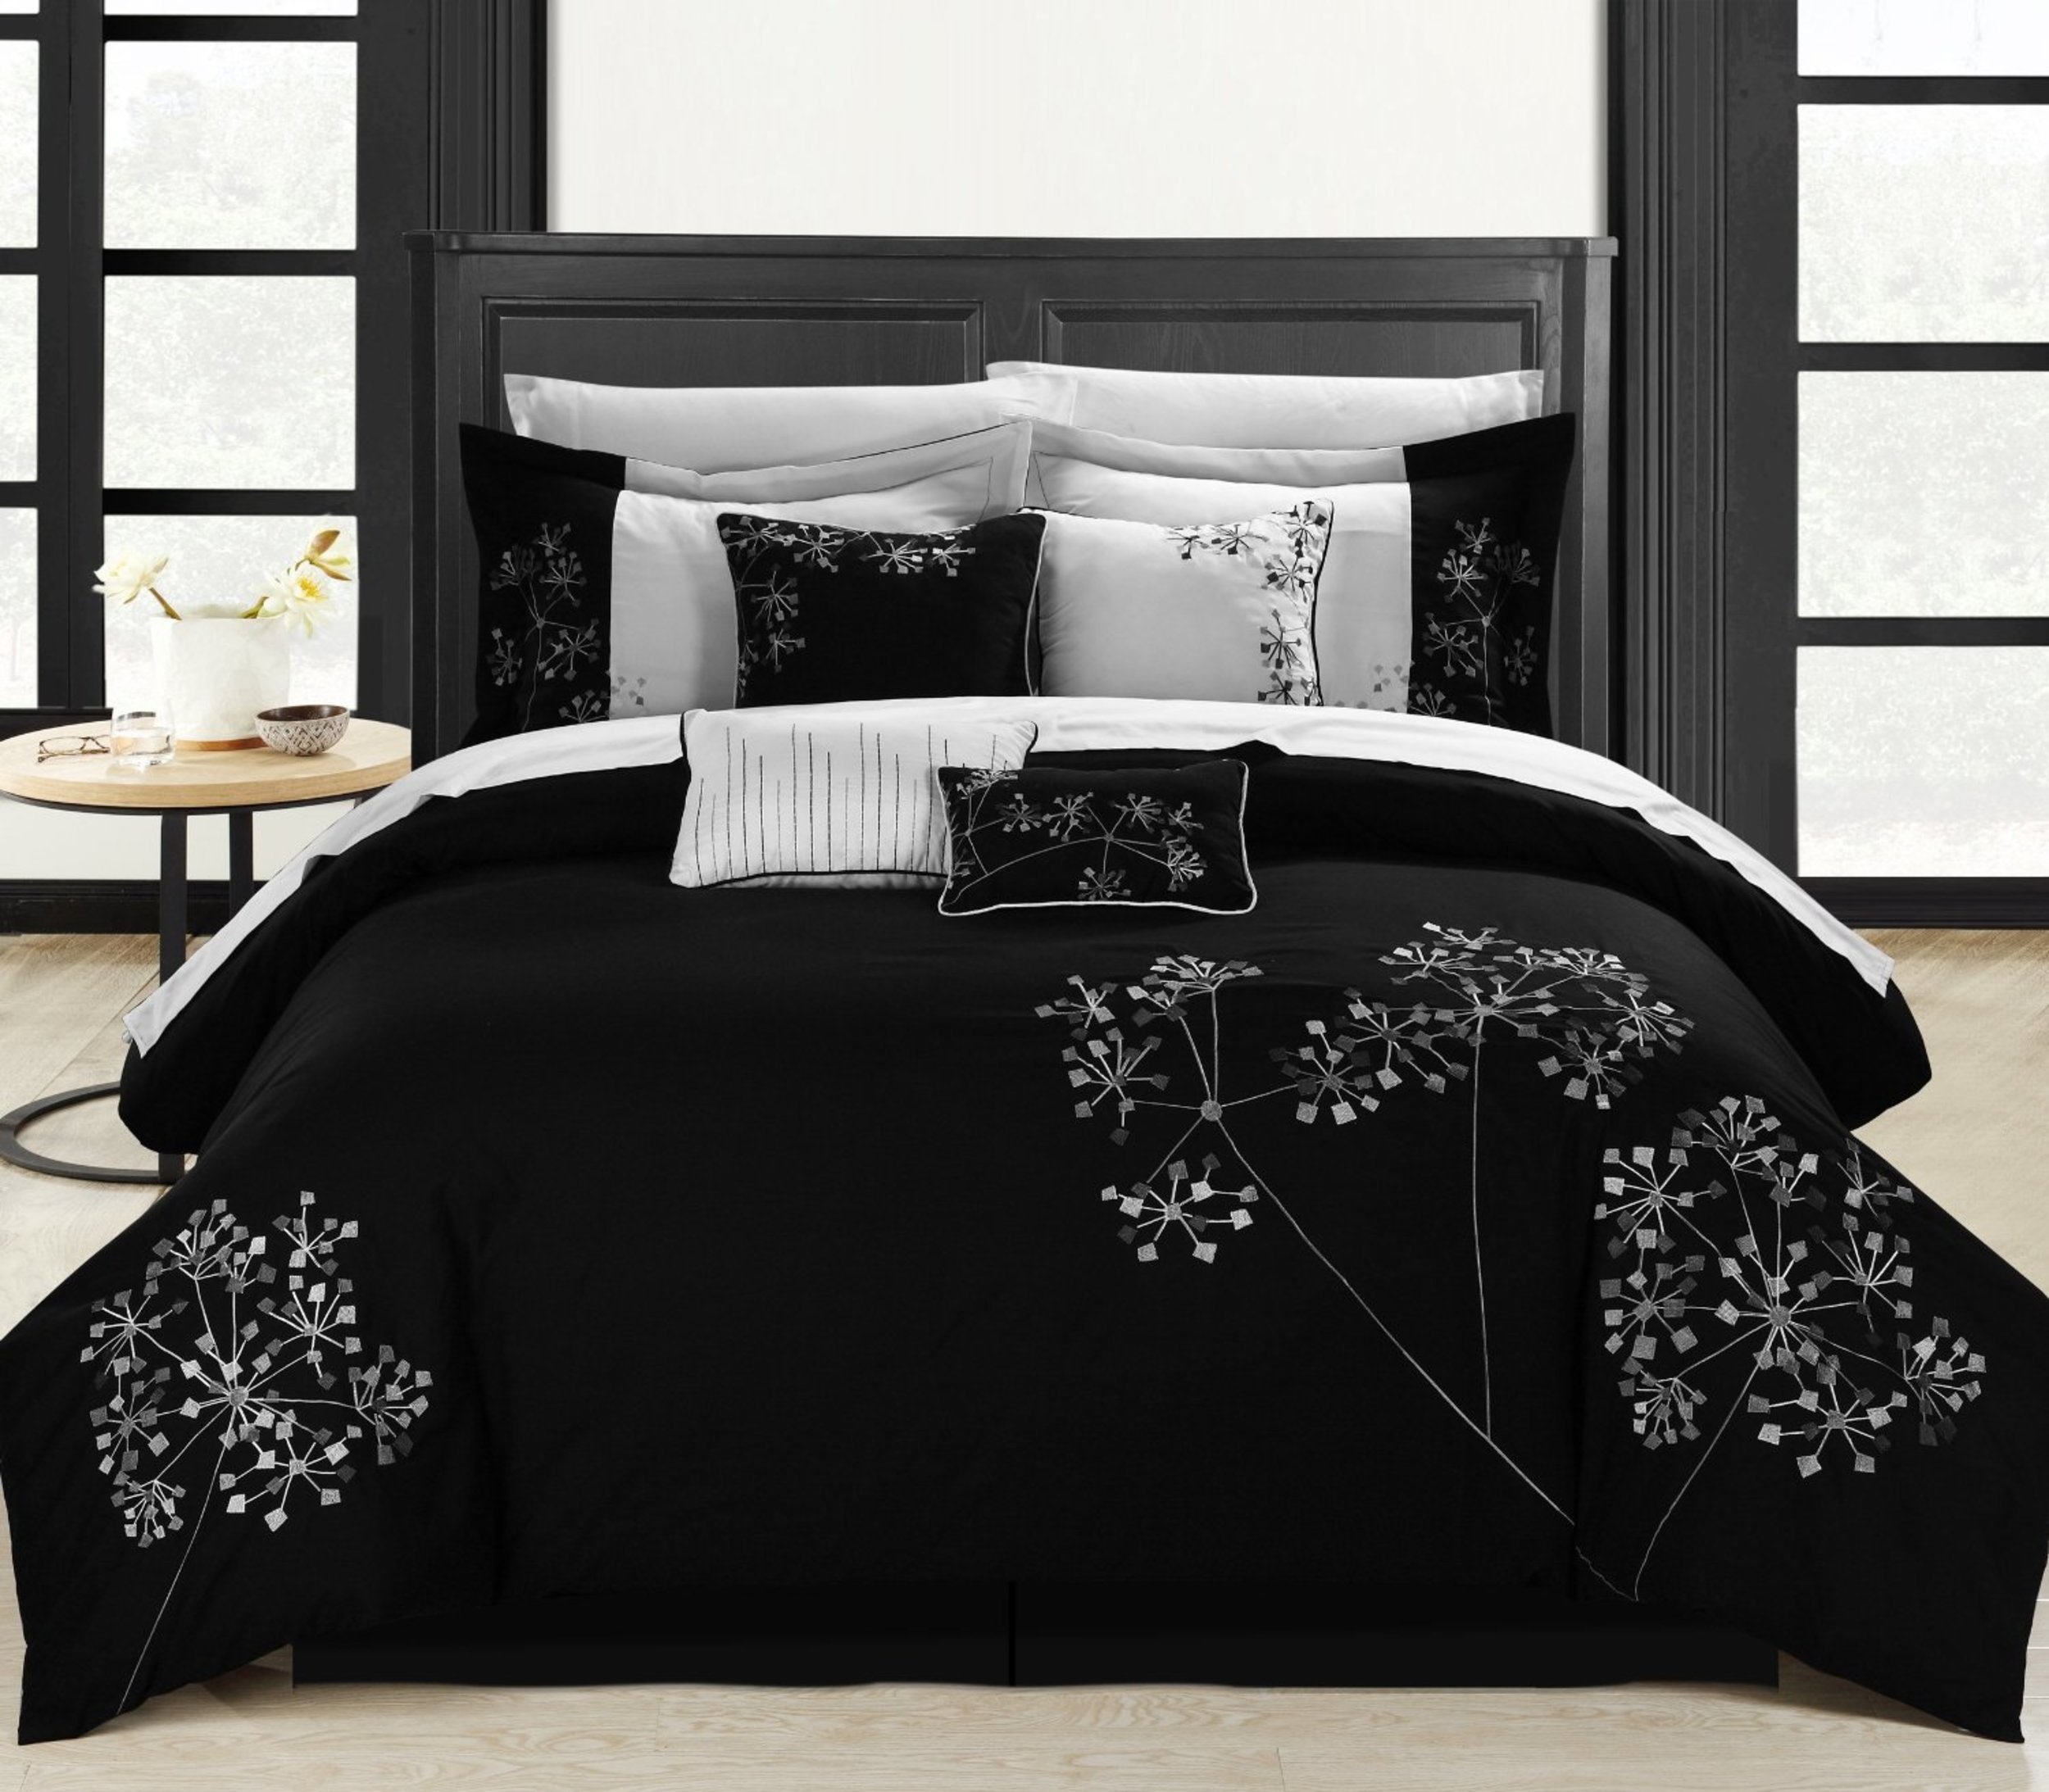 L Black Bedding Sets Hot Sale Queen Size Fashion Bedding Sets Warm Duvet  Cover Queen Size Home Decoration Designer Bed Sheets From Classicalforever,  $117.21